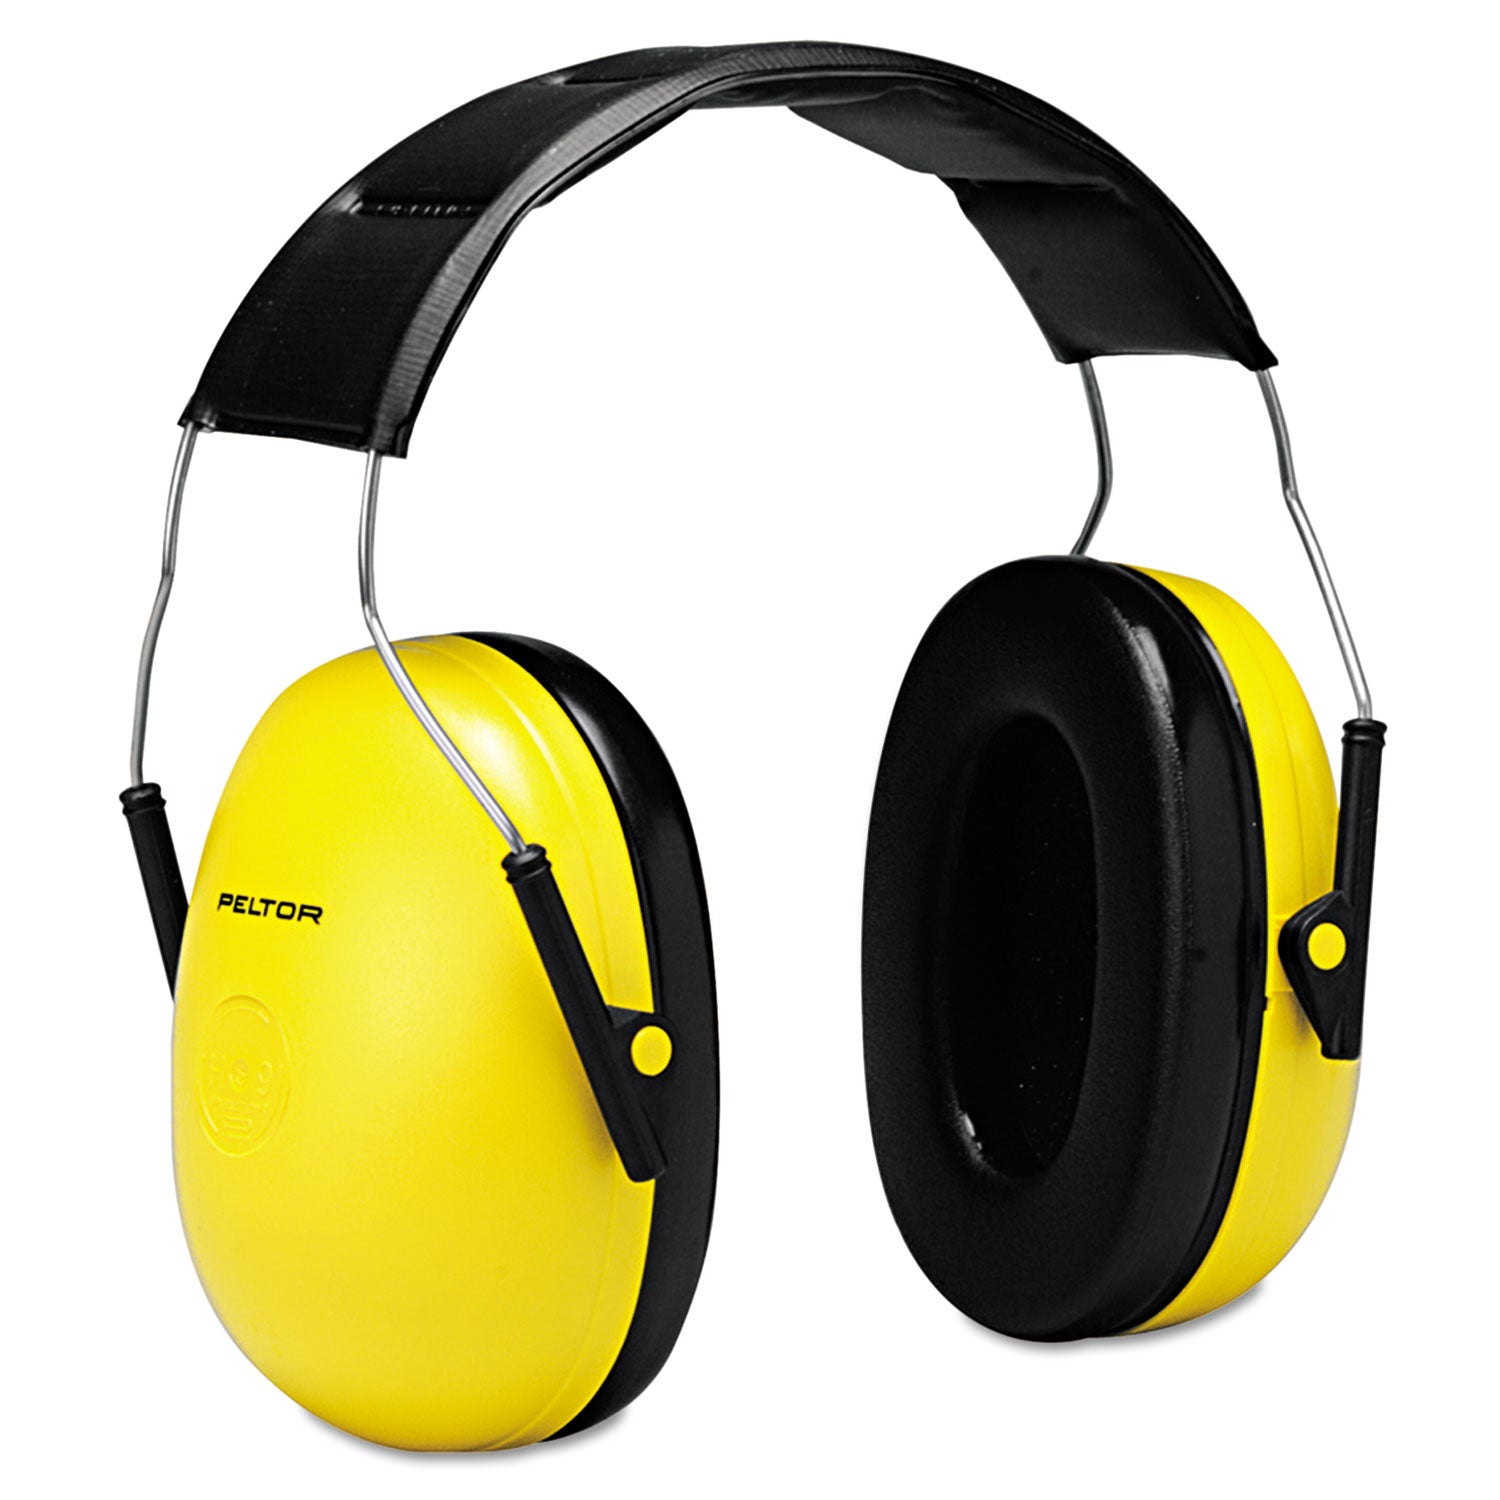 optime-98-h9a-earmuffs-25-db-nrr-yellow-black_mmmh9a - 1